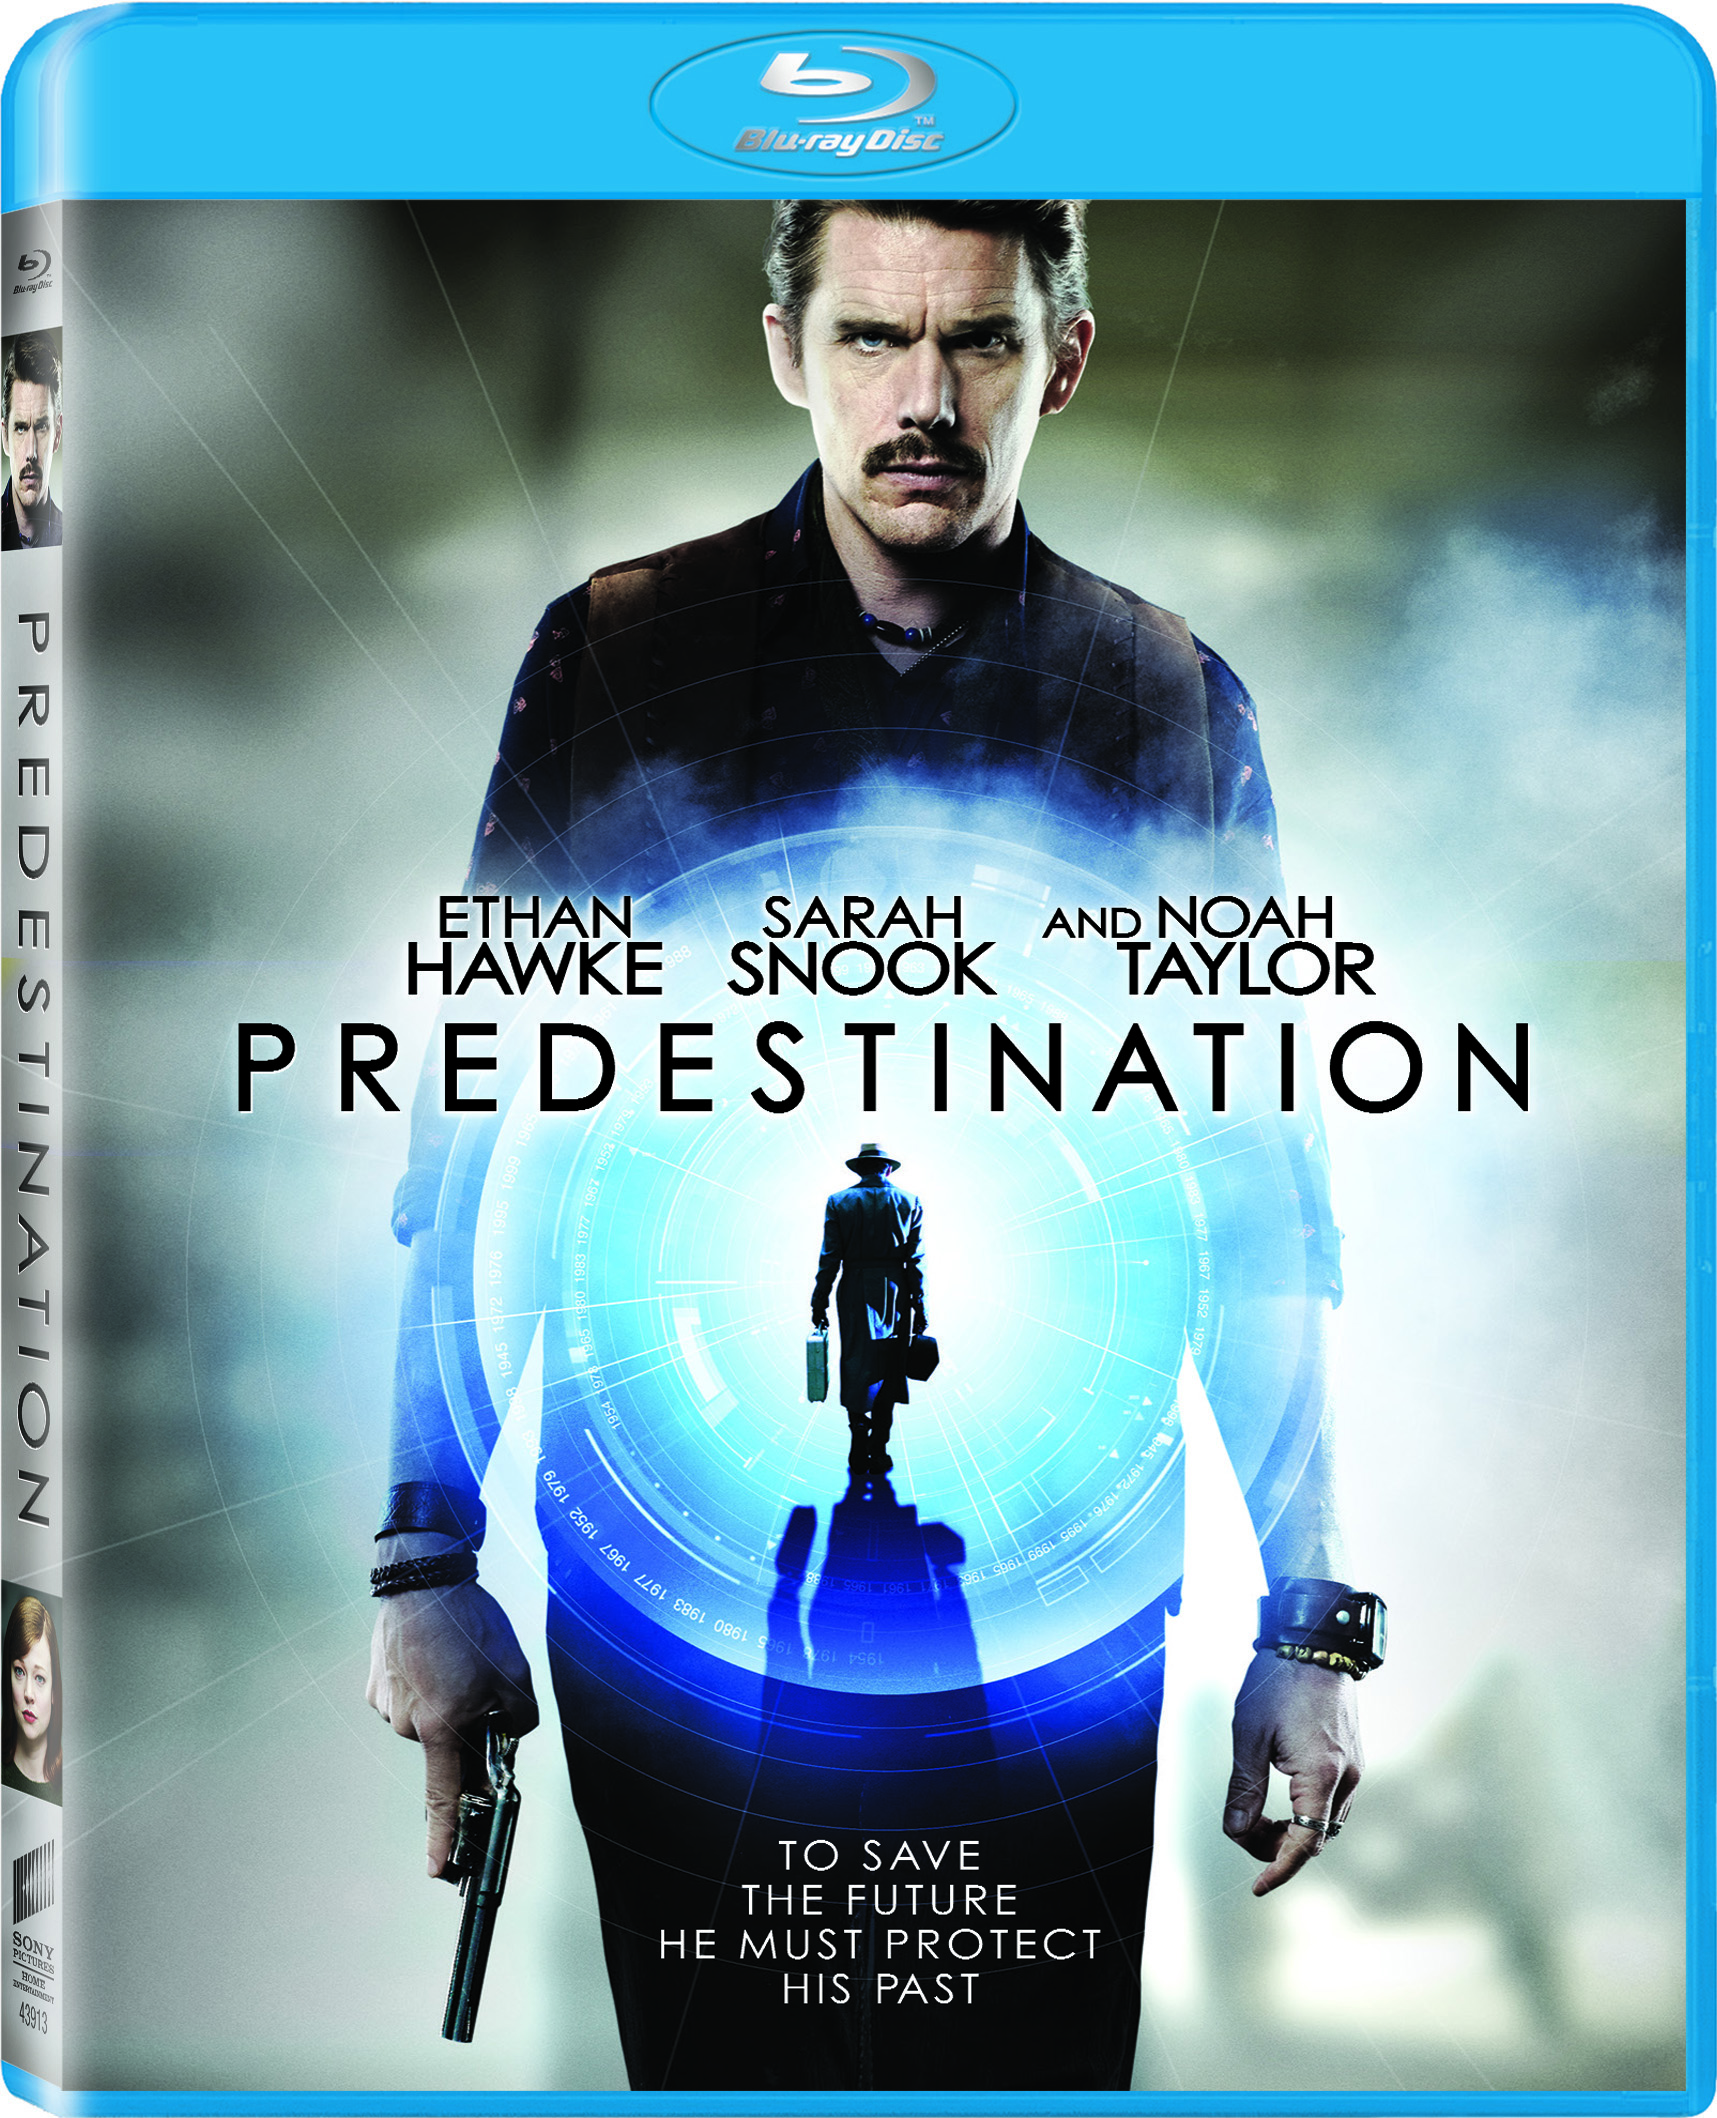 Predestination Blu-ray Review